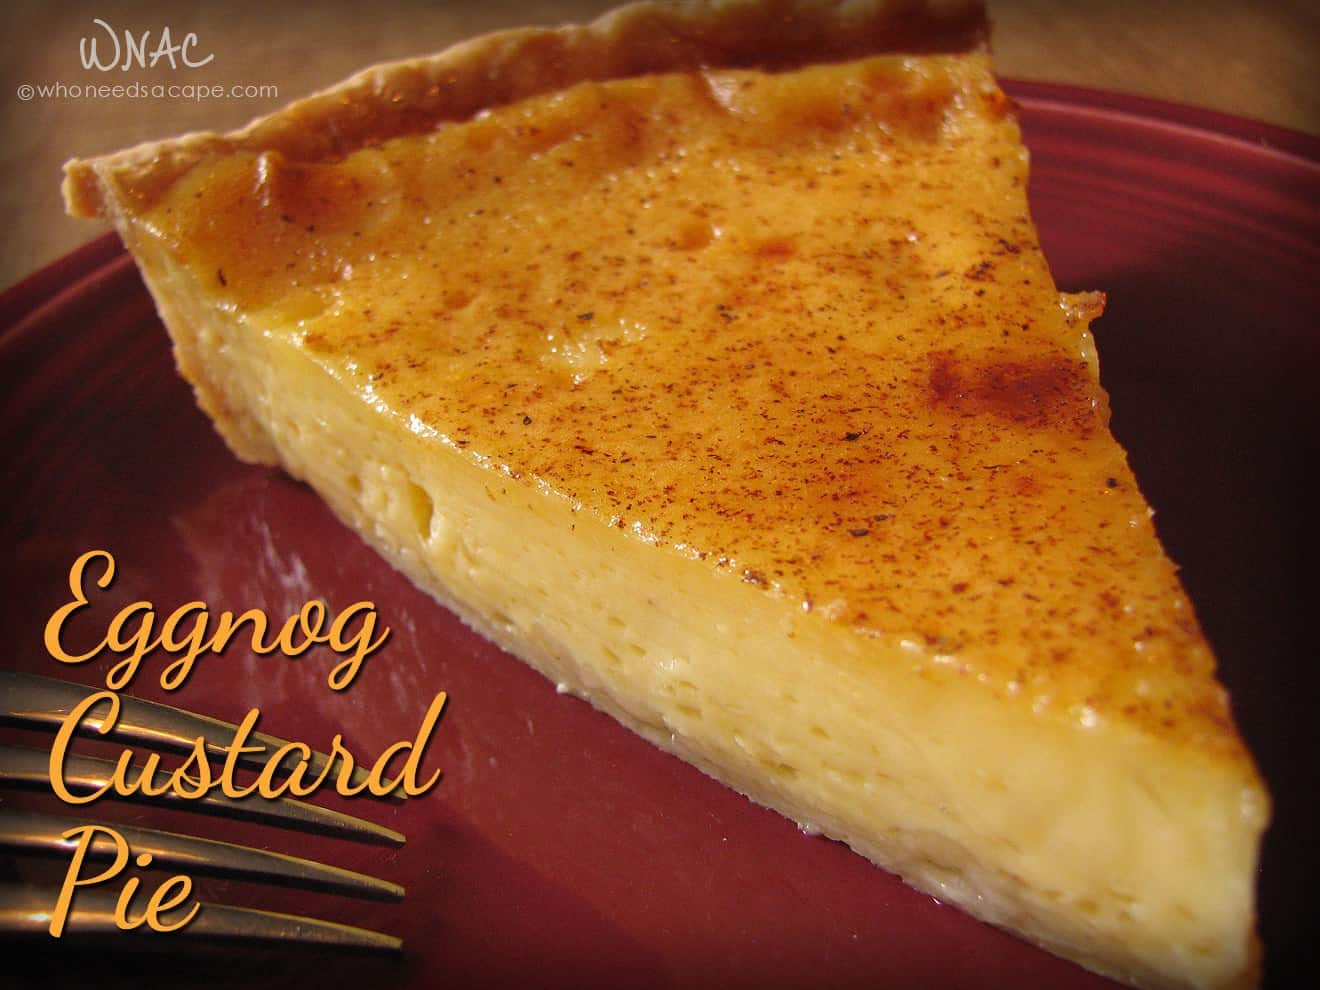 Eggnog custard pie